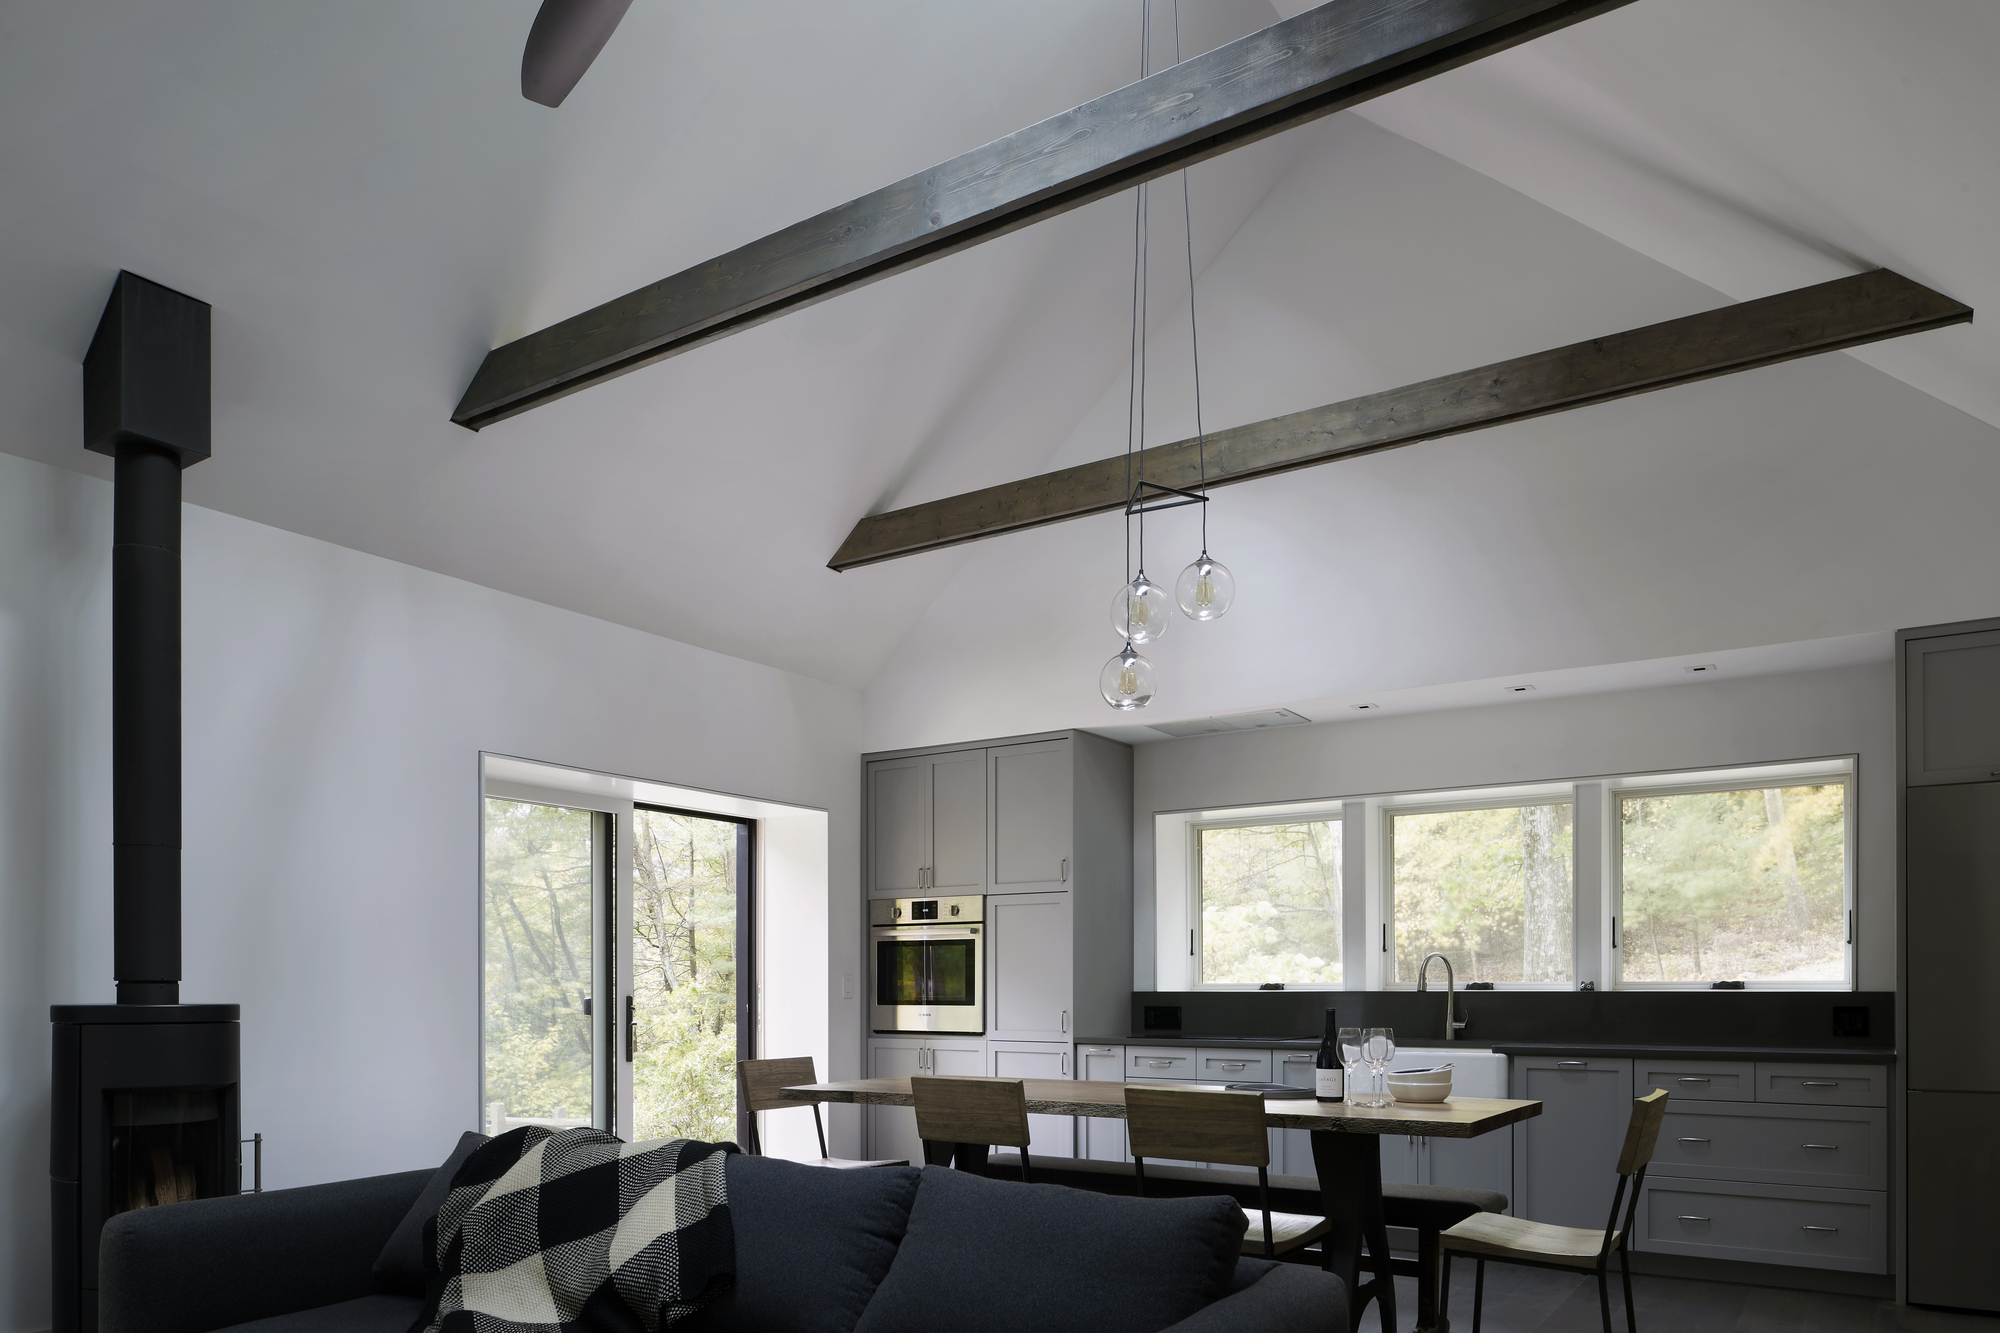 House Interior Interior Design Kitchen Countertops Chair Table 2000x1333